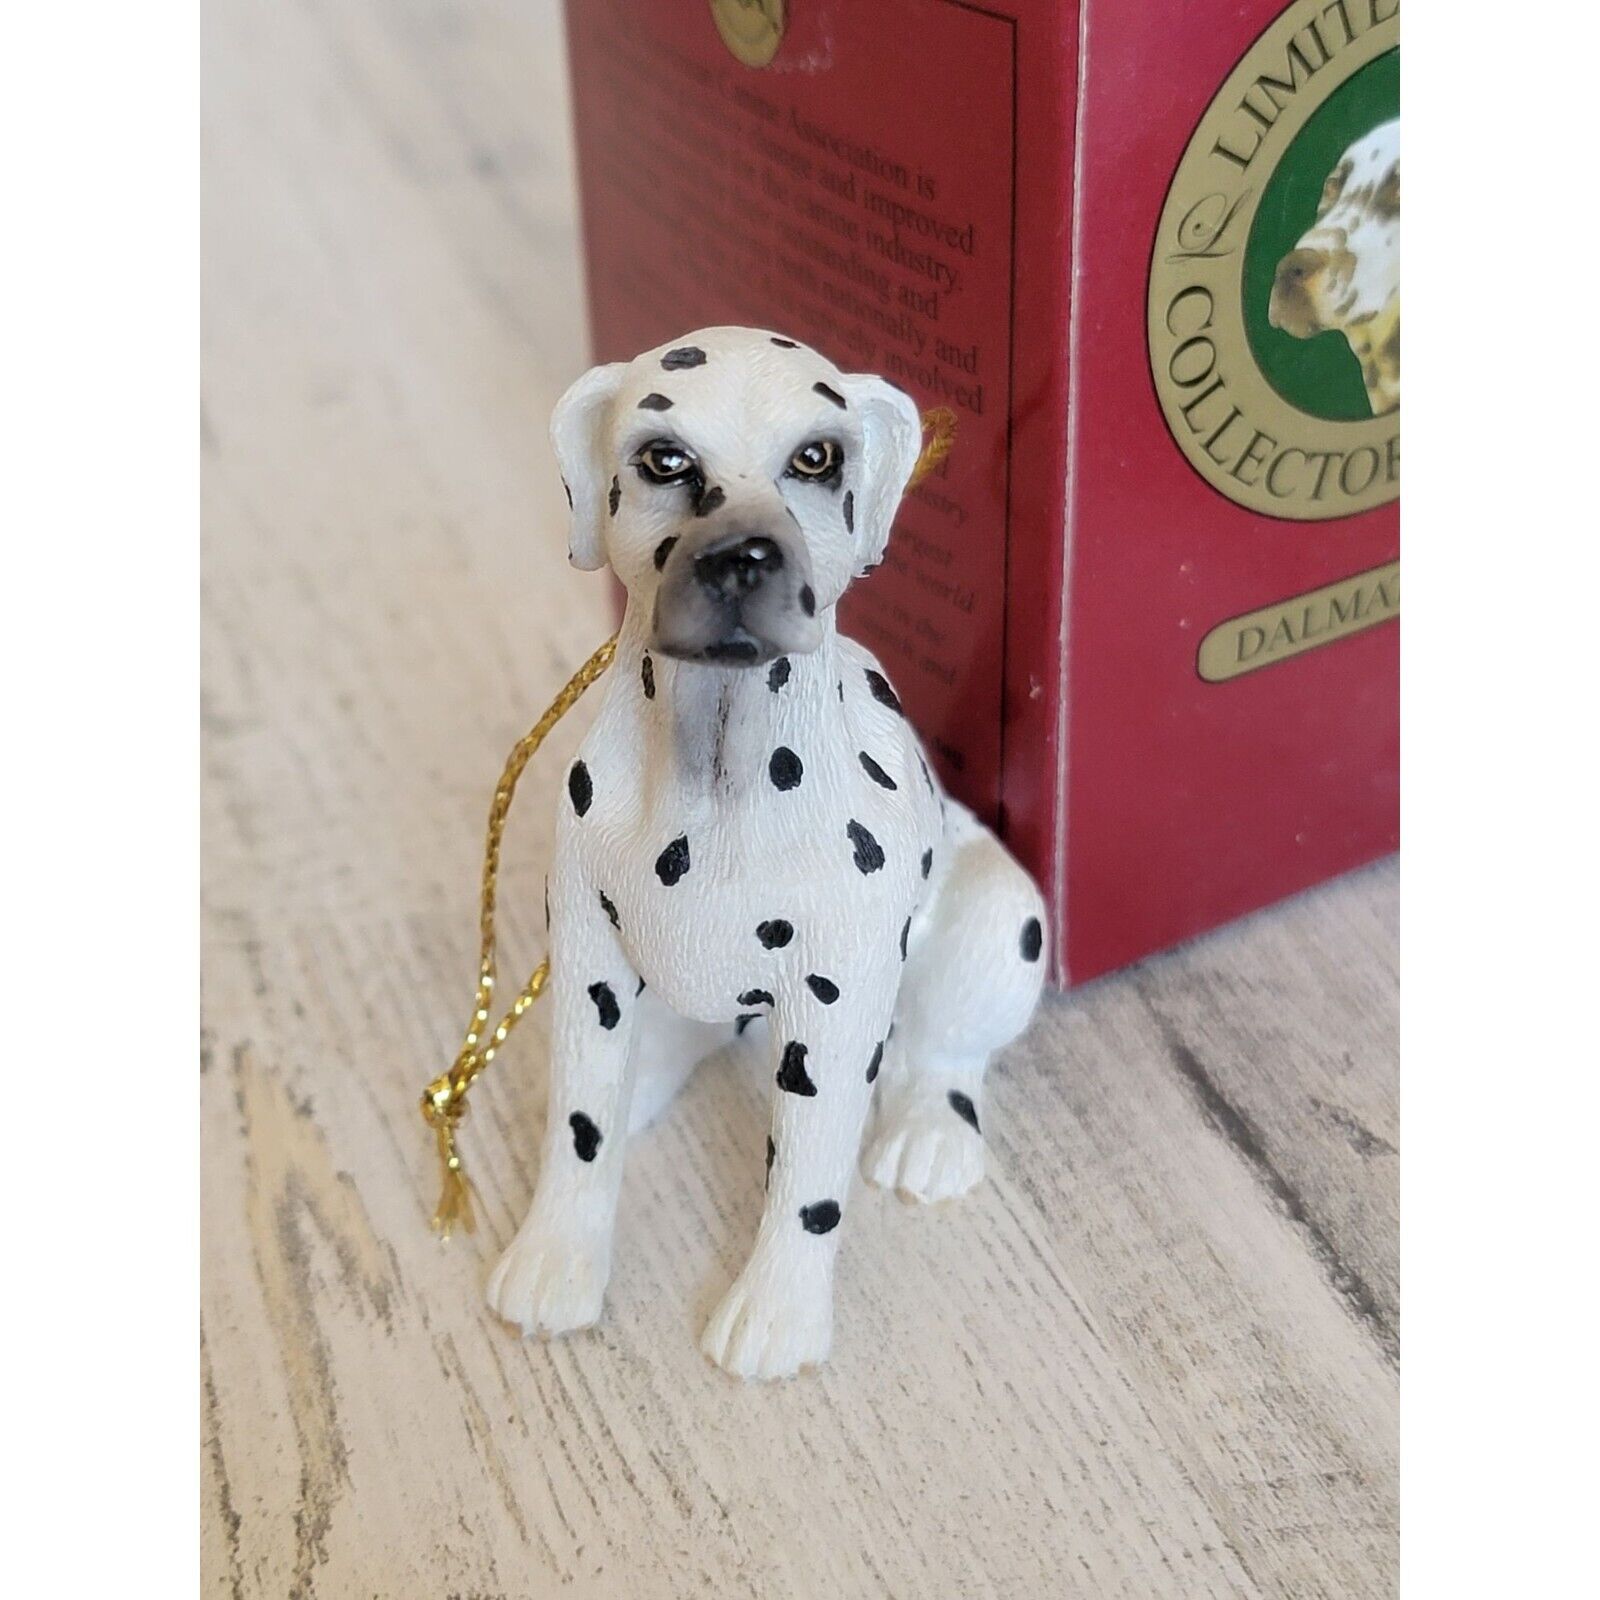 American Canine Association Dalmatian pet dog animal ornament